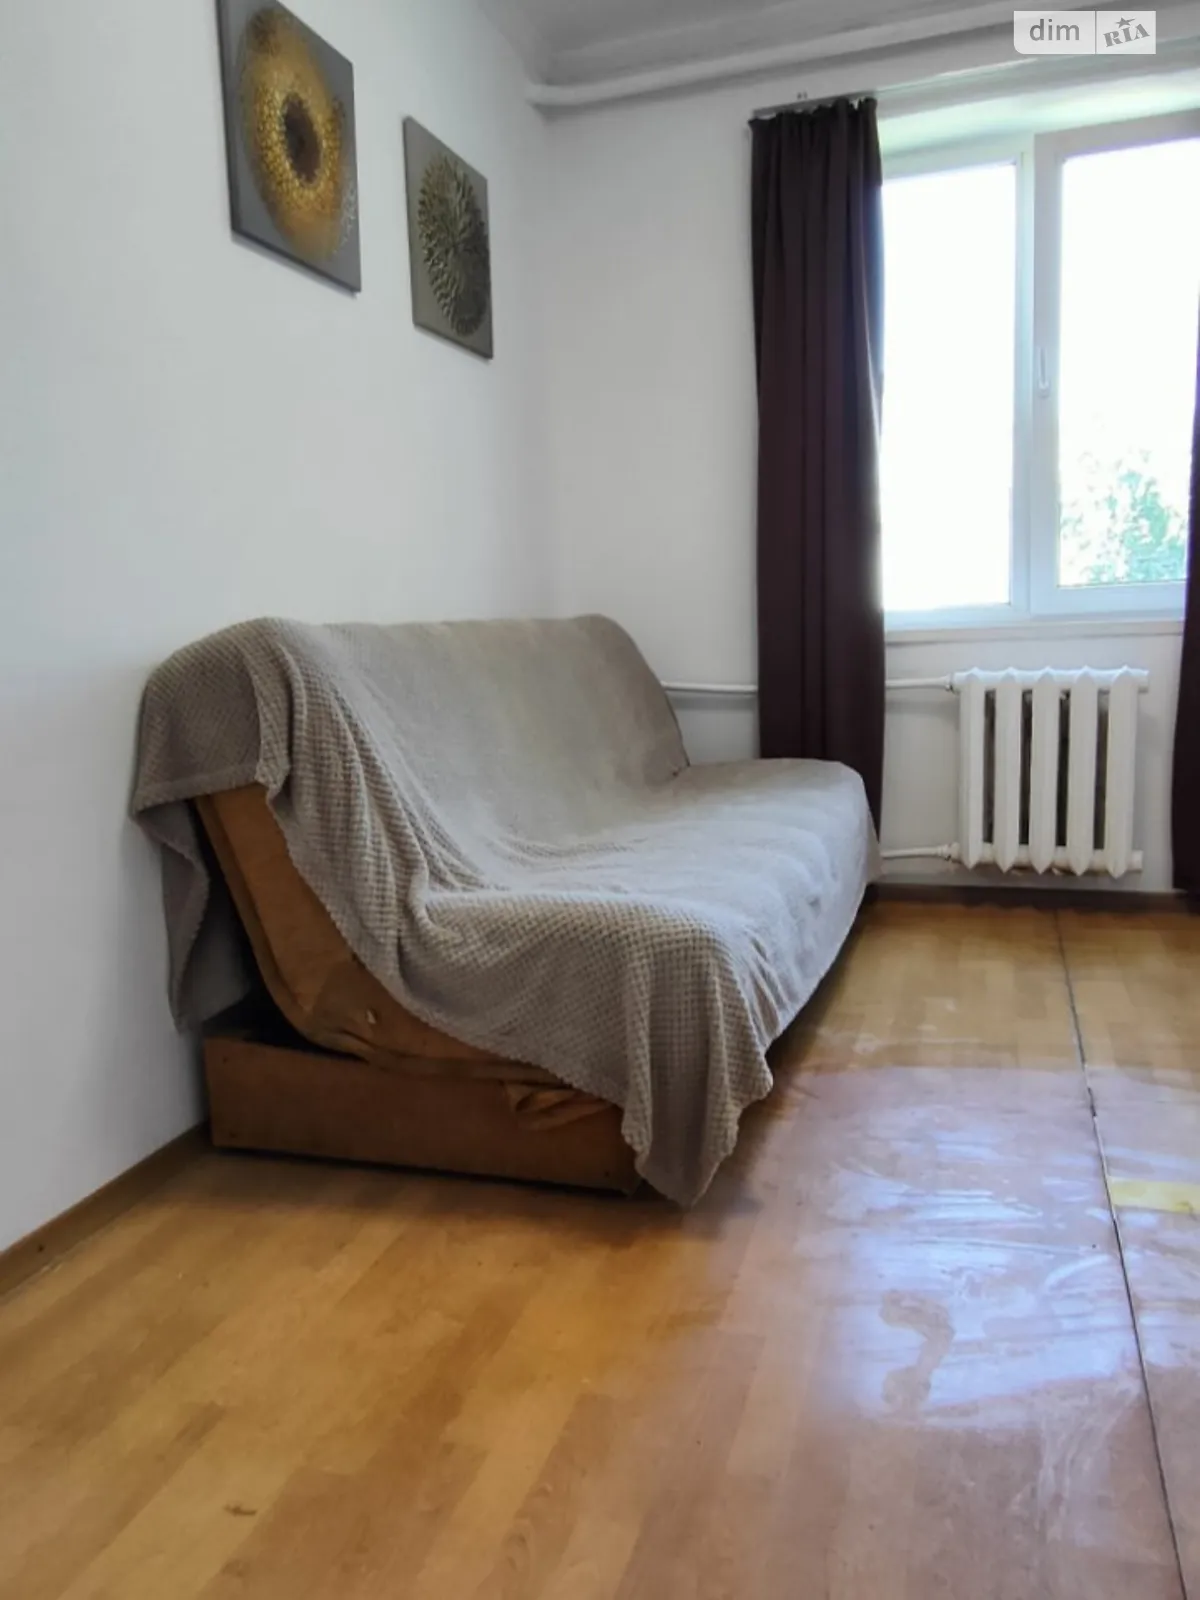 Продается комната 14 кв. м в Одессе, цена: 7000 $ - фото 1